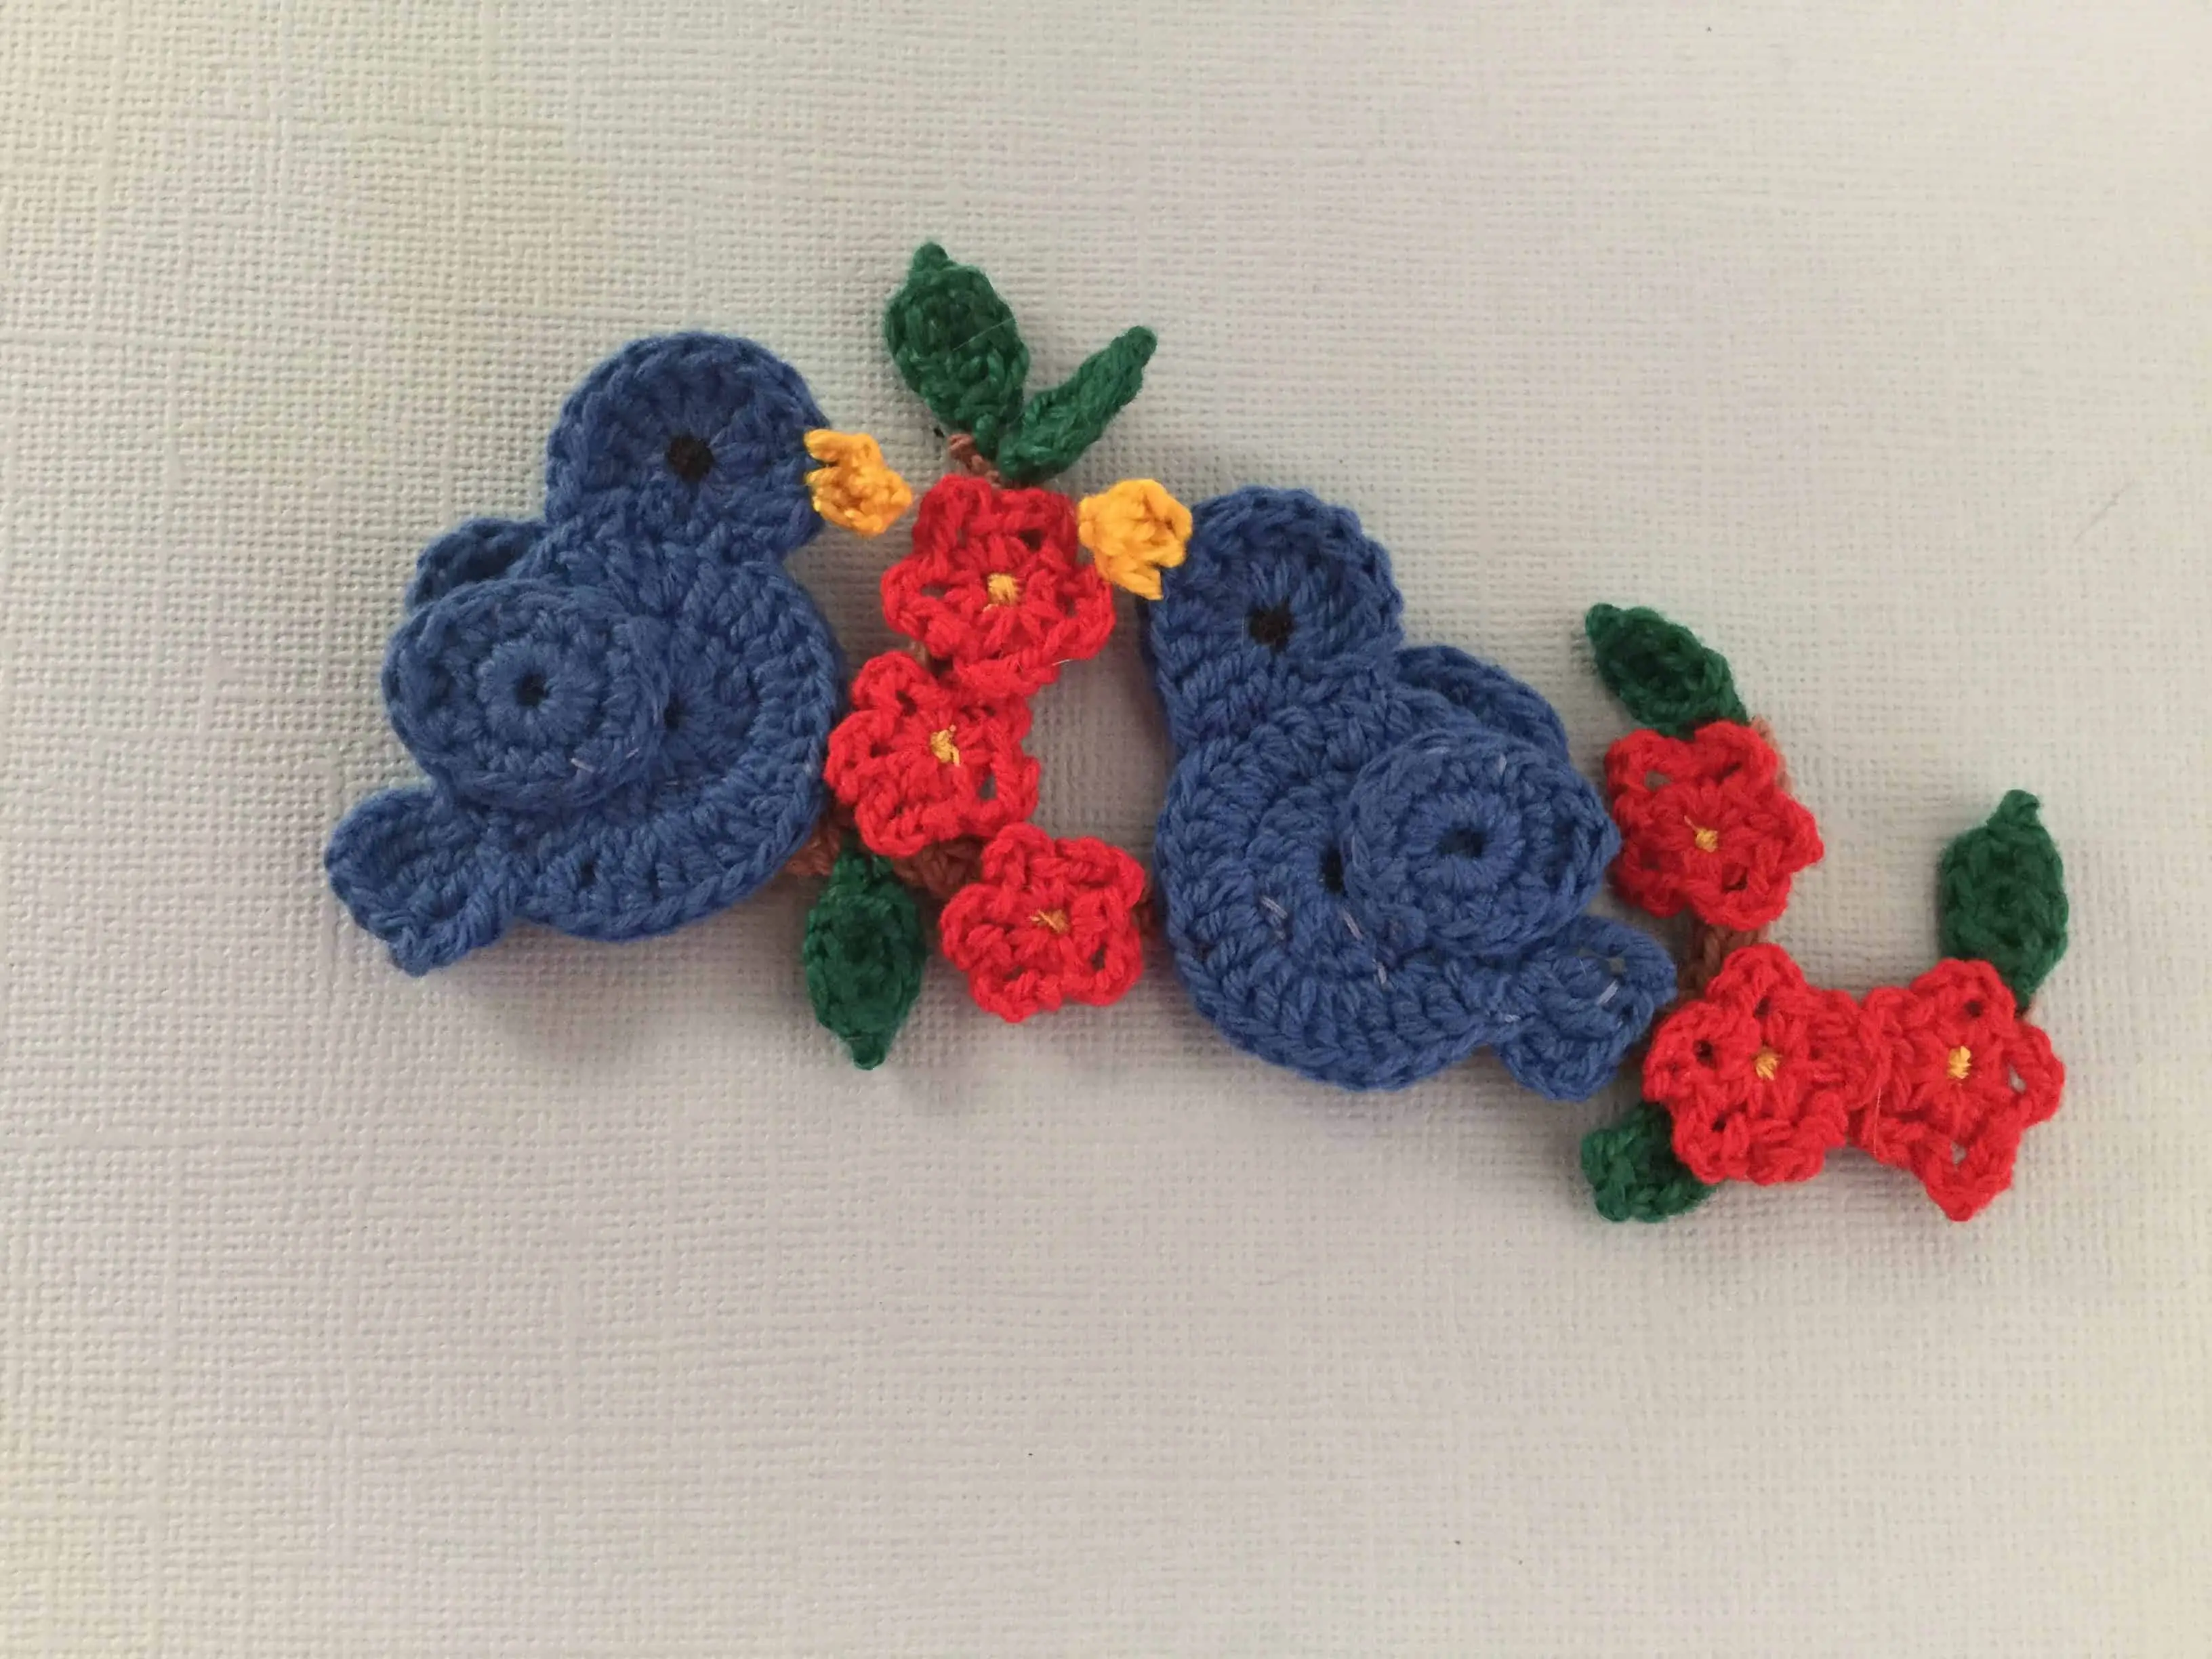 Finished crochet birds